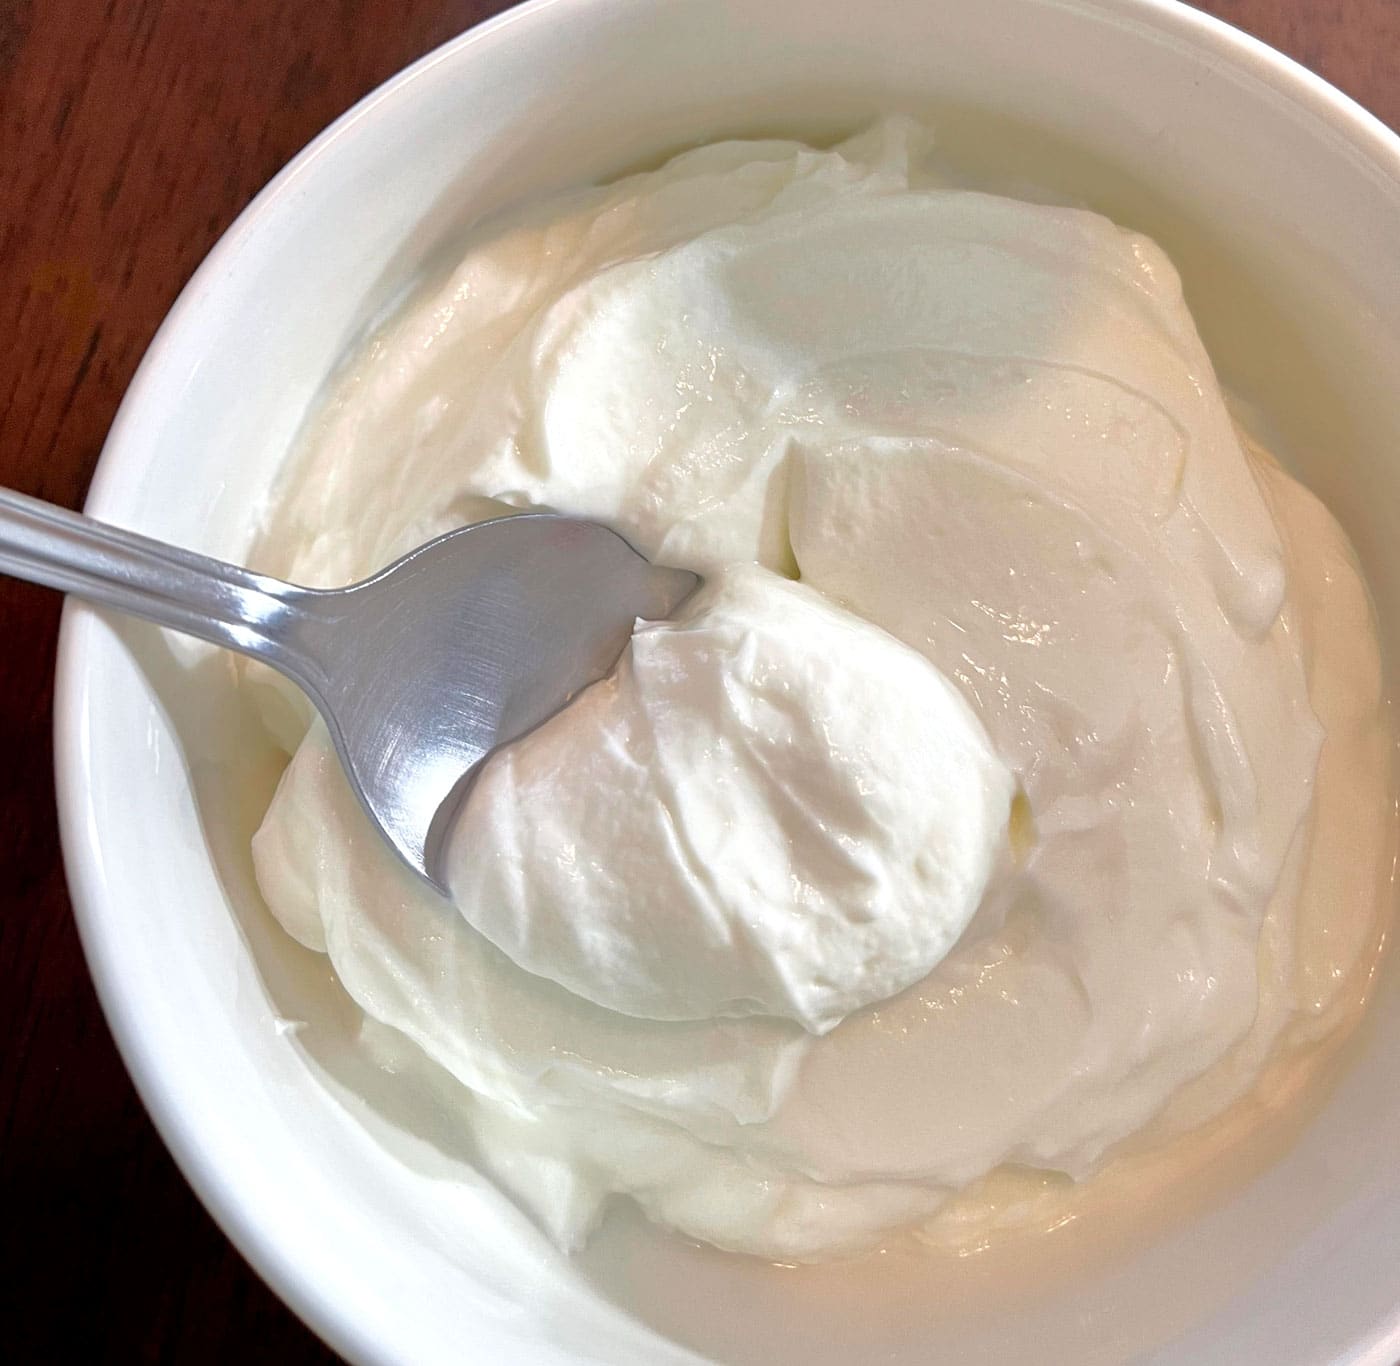 Greek Yogurt Substitute For Sour Cream In Baking, Salad Dressings, Dips